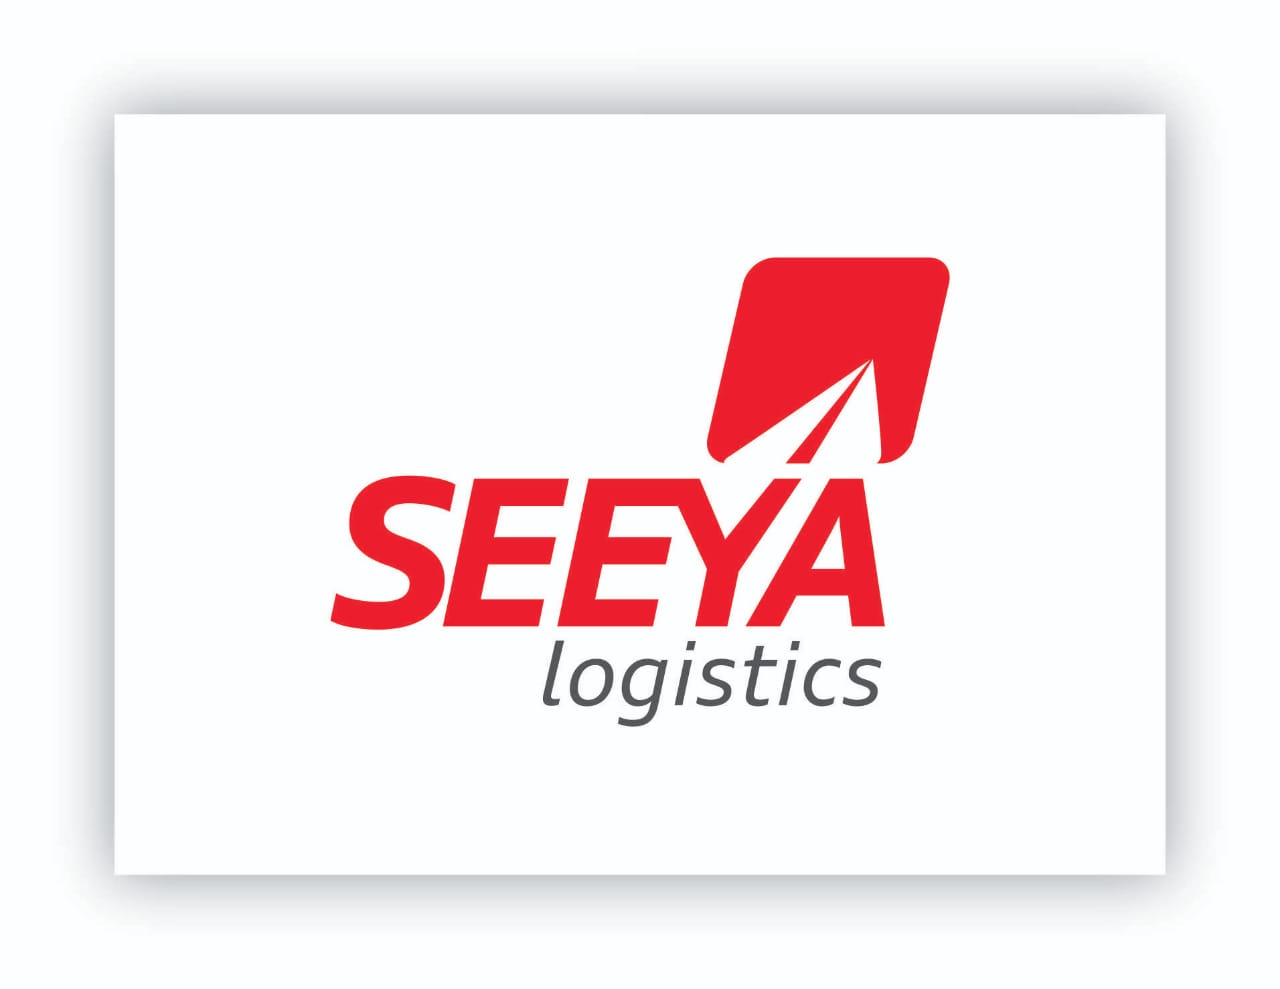 Seeya logistics